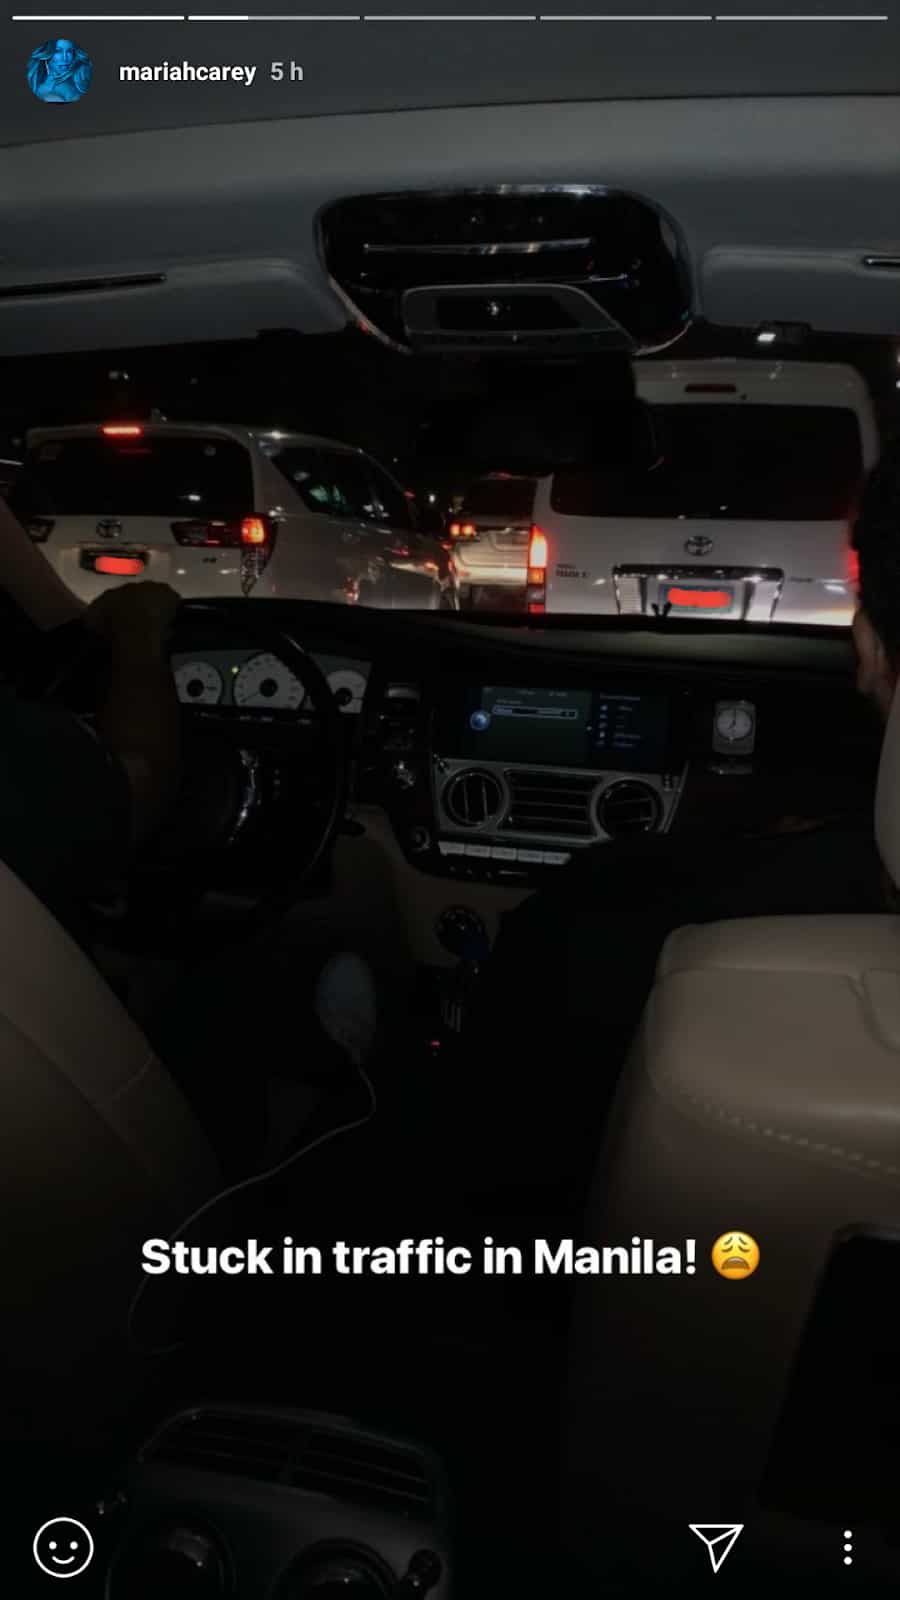 Di nakaligtas! Mariah Carey experiences Manila traffic jam on her way to her concert